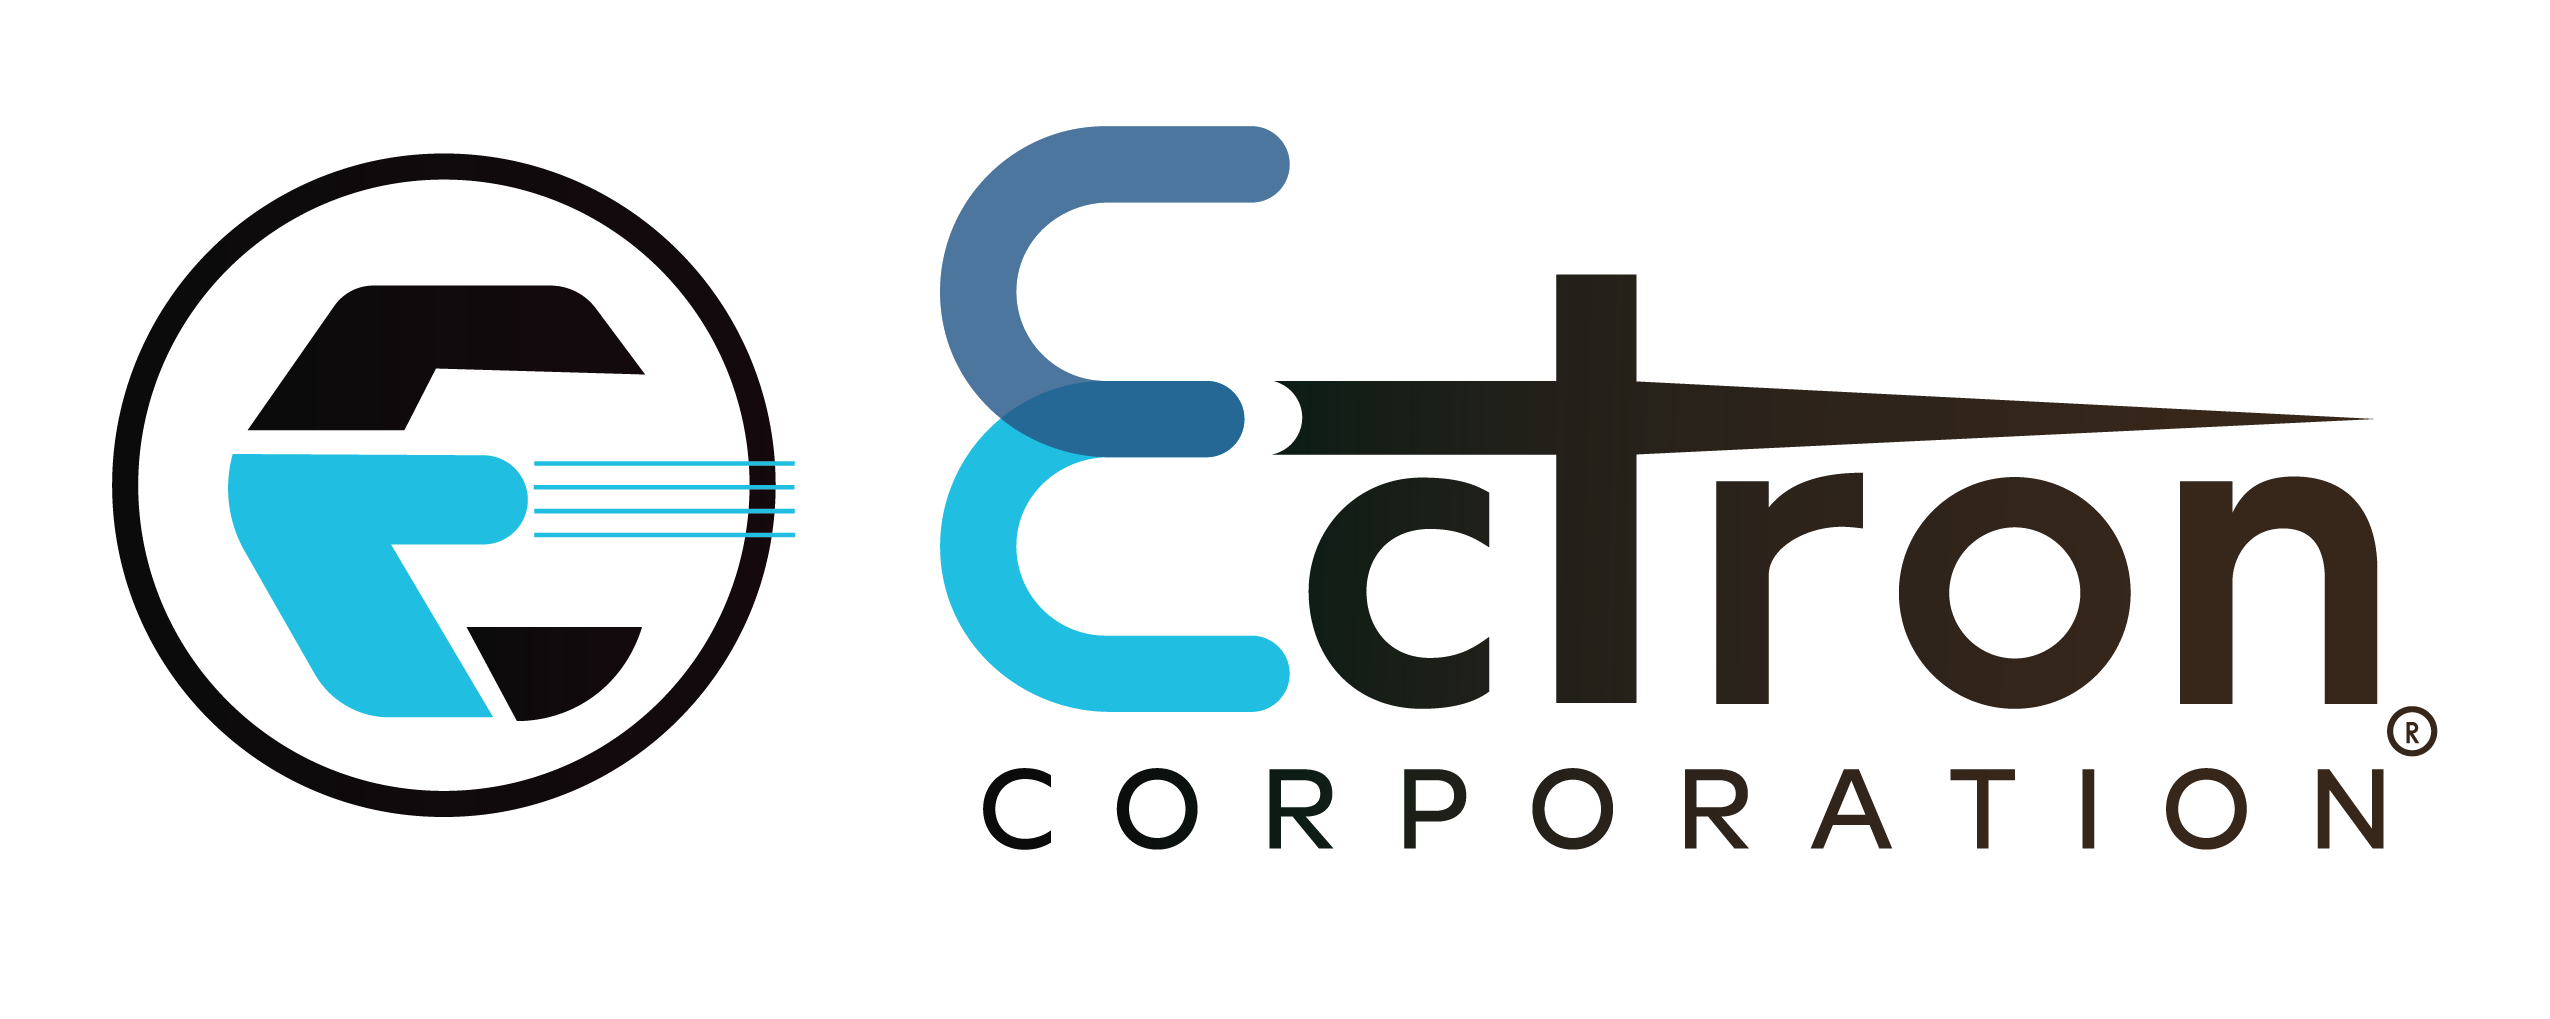 Ectron Corporation logo